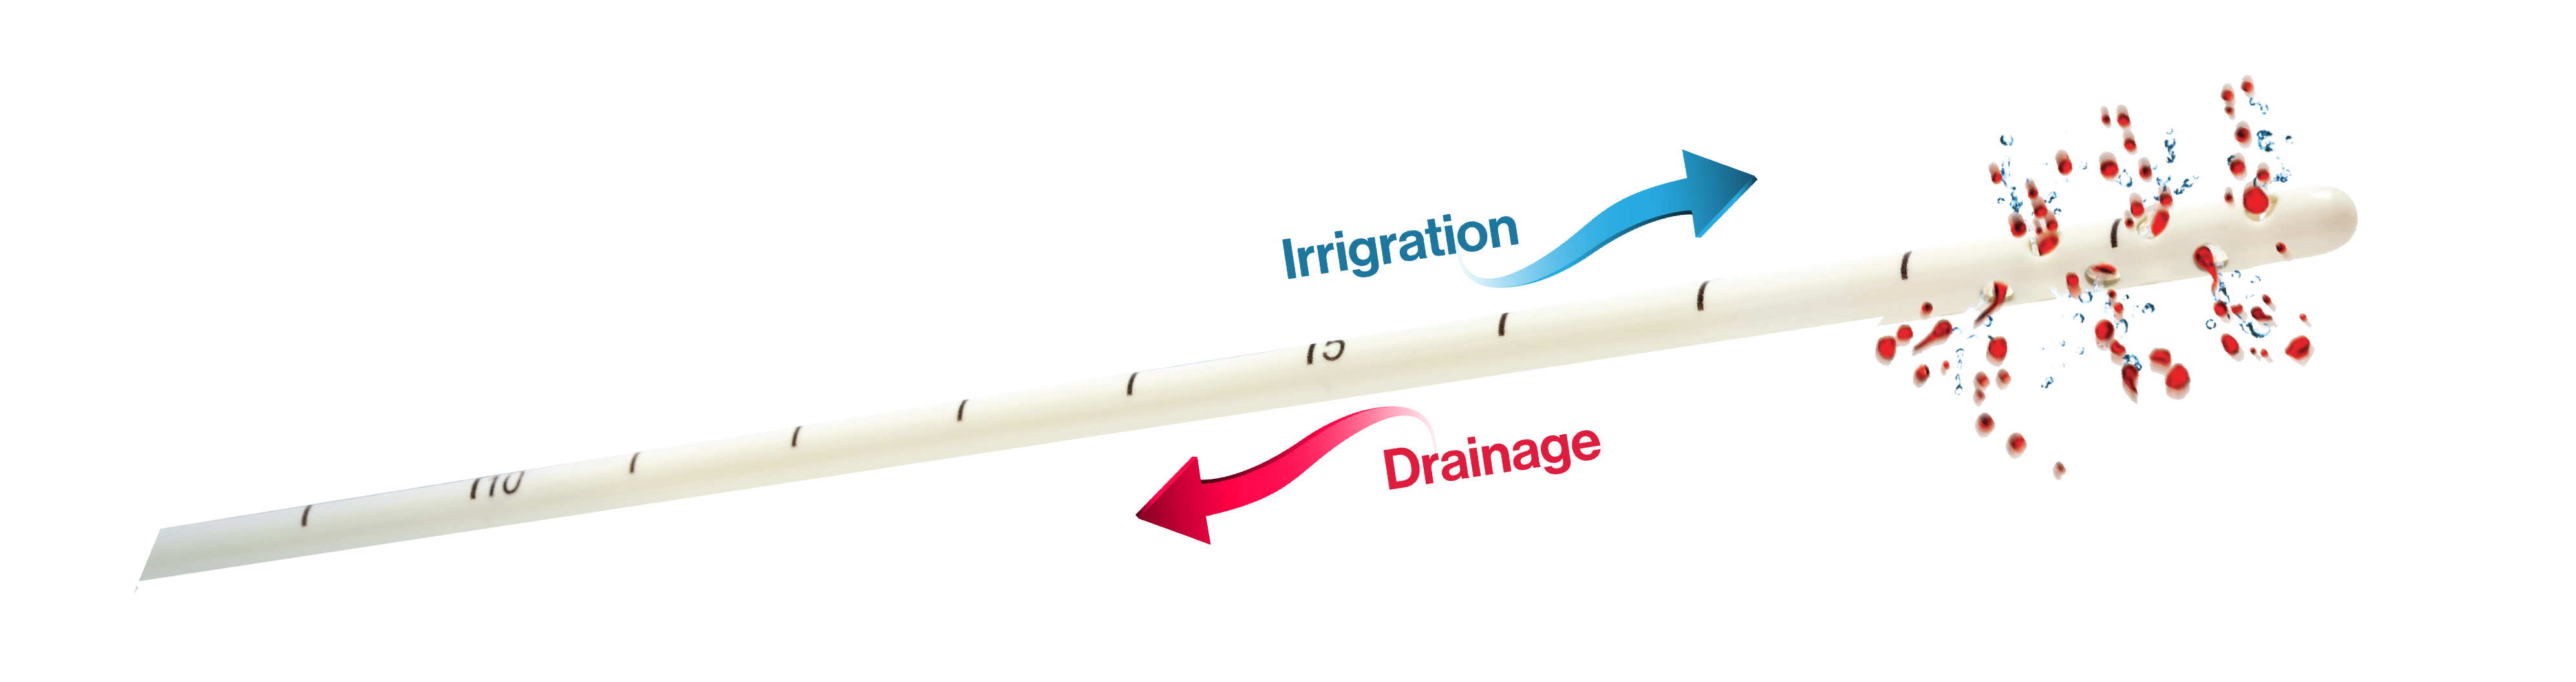 Neurological Fluid Management Technology - IRRAS irrigation illustration